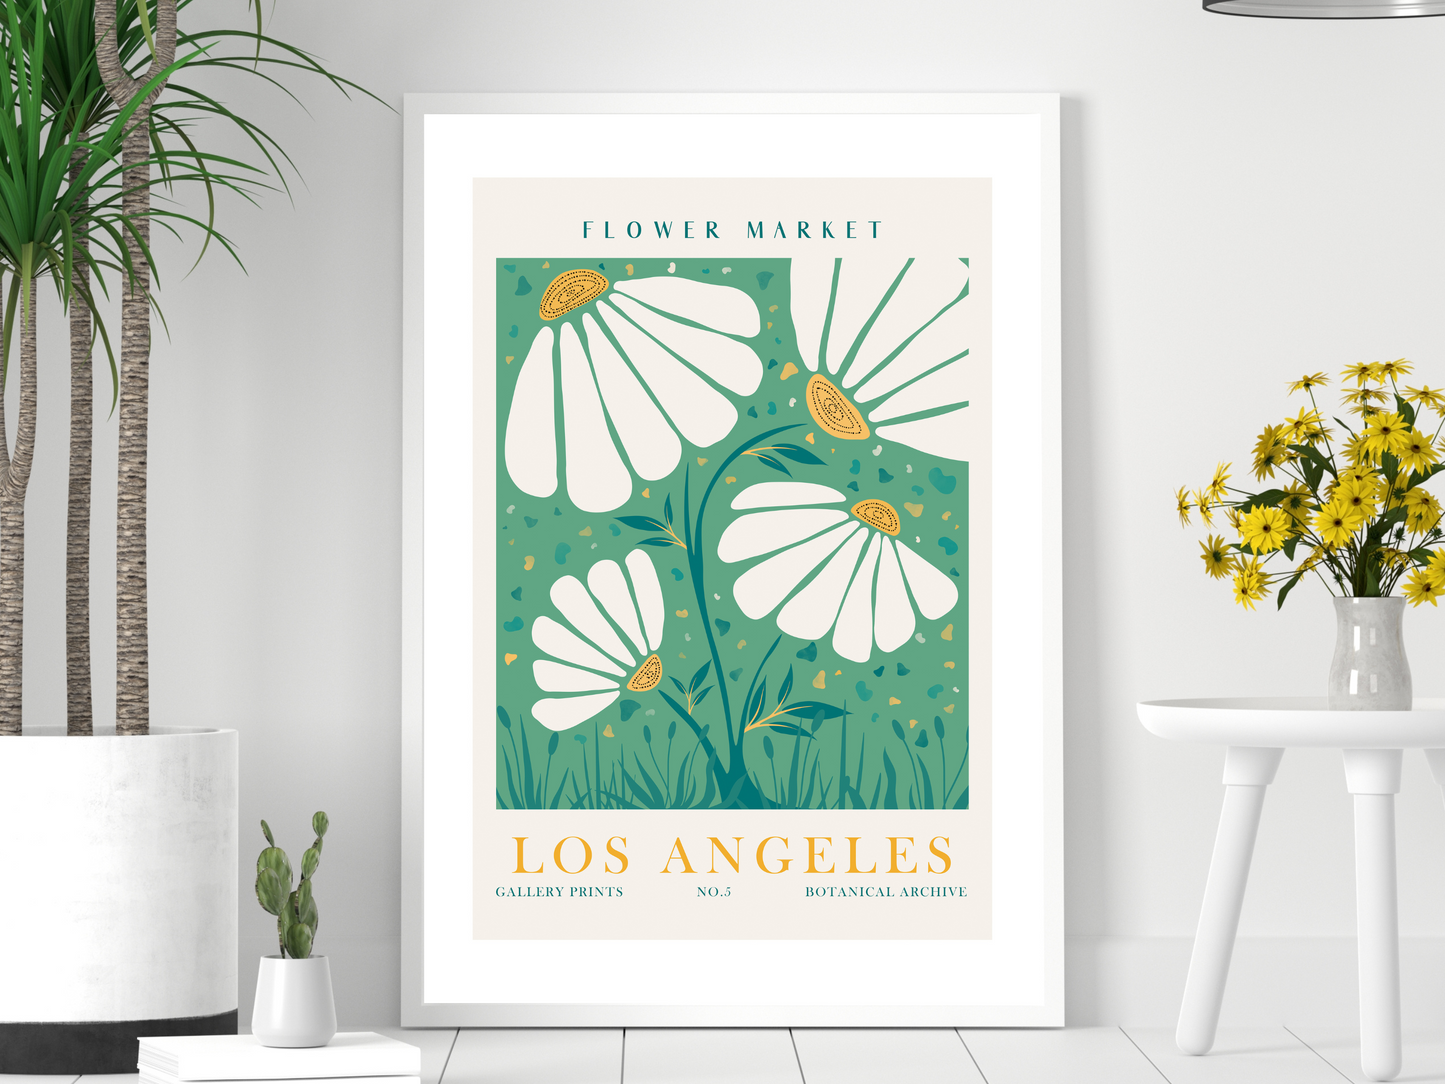 Flower Market - Los Angeles